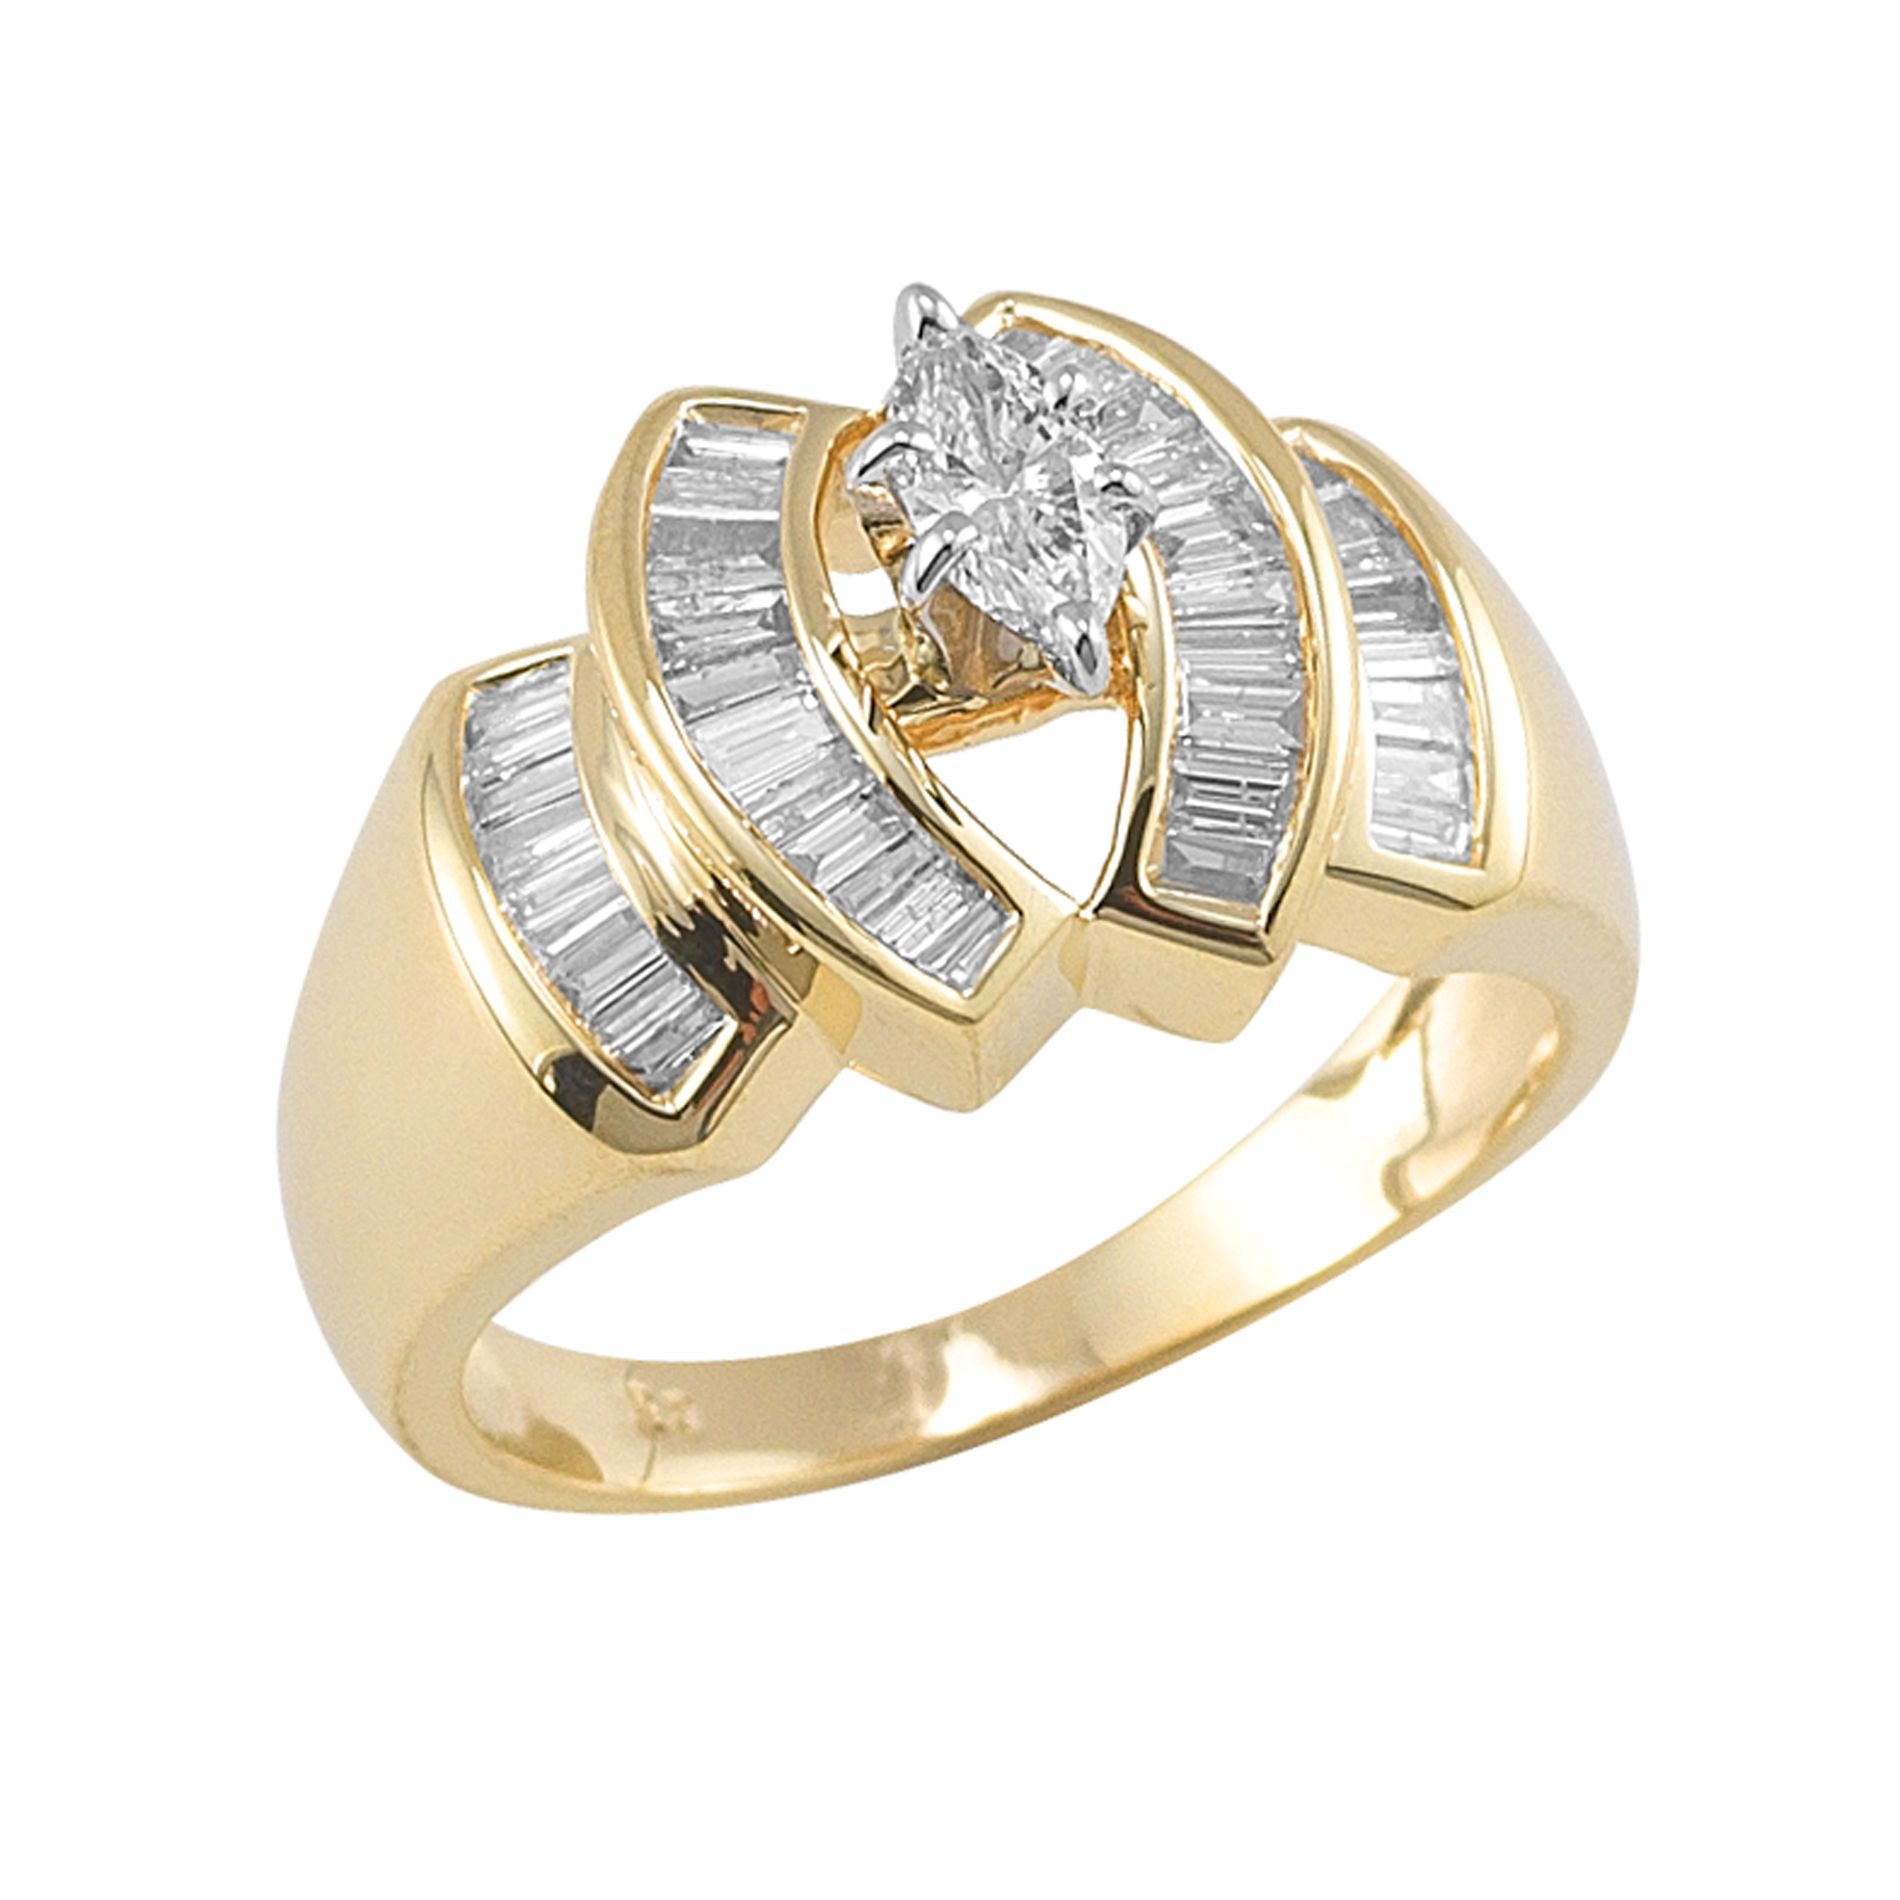 10Kt Yellow Gold 3/4Cttw Diamond Ring